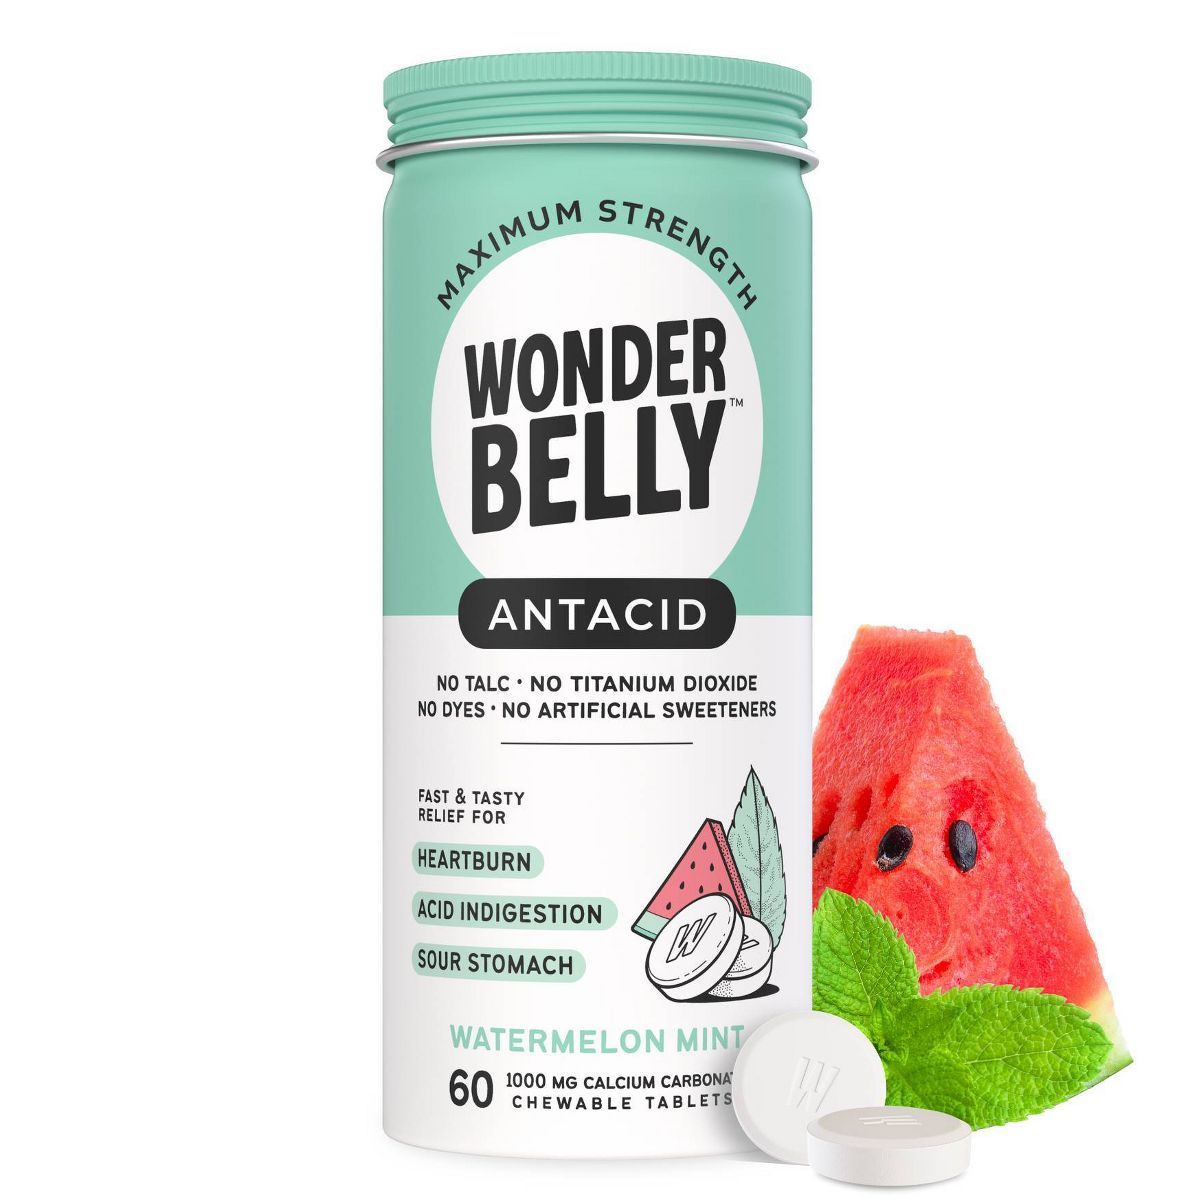 Wonderbelly Antacid 1000mg Chewable Heartburn Relief Tablets - Watermelon Mint - 60ct | Target